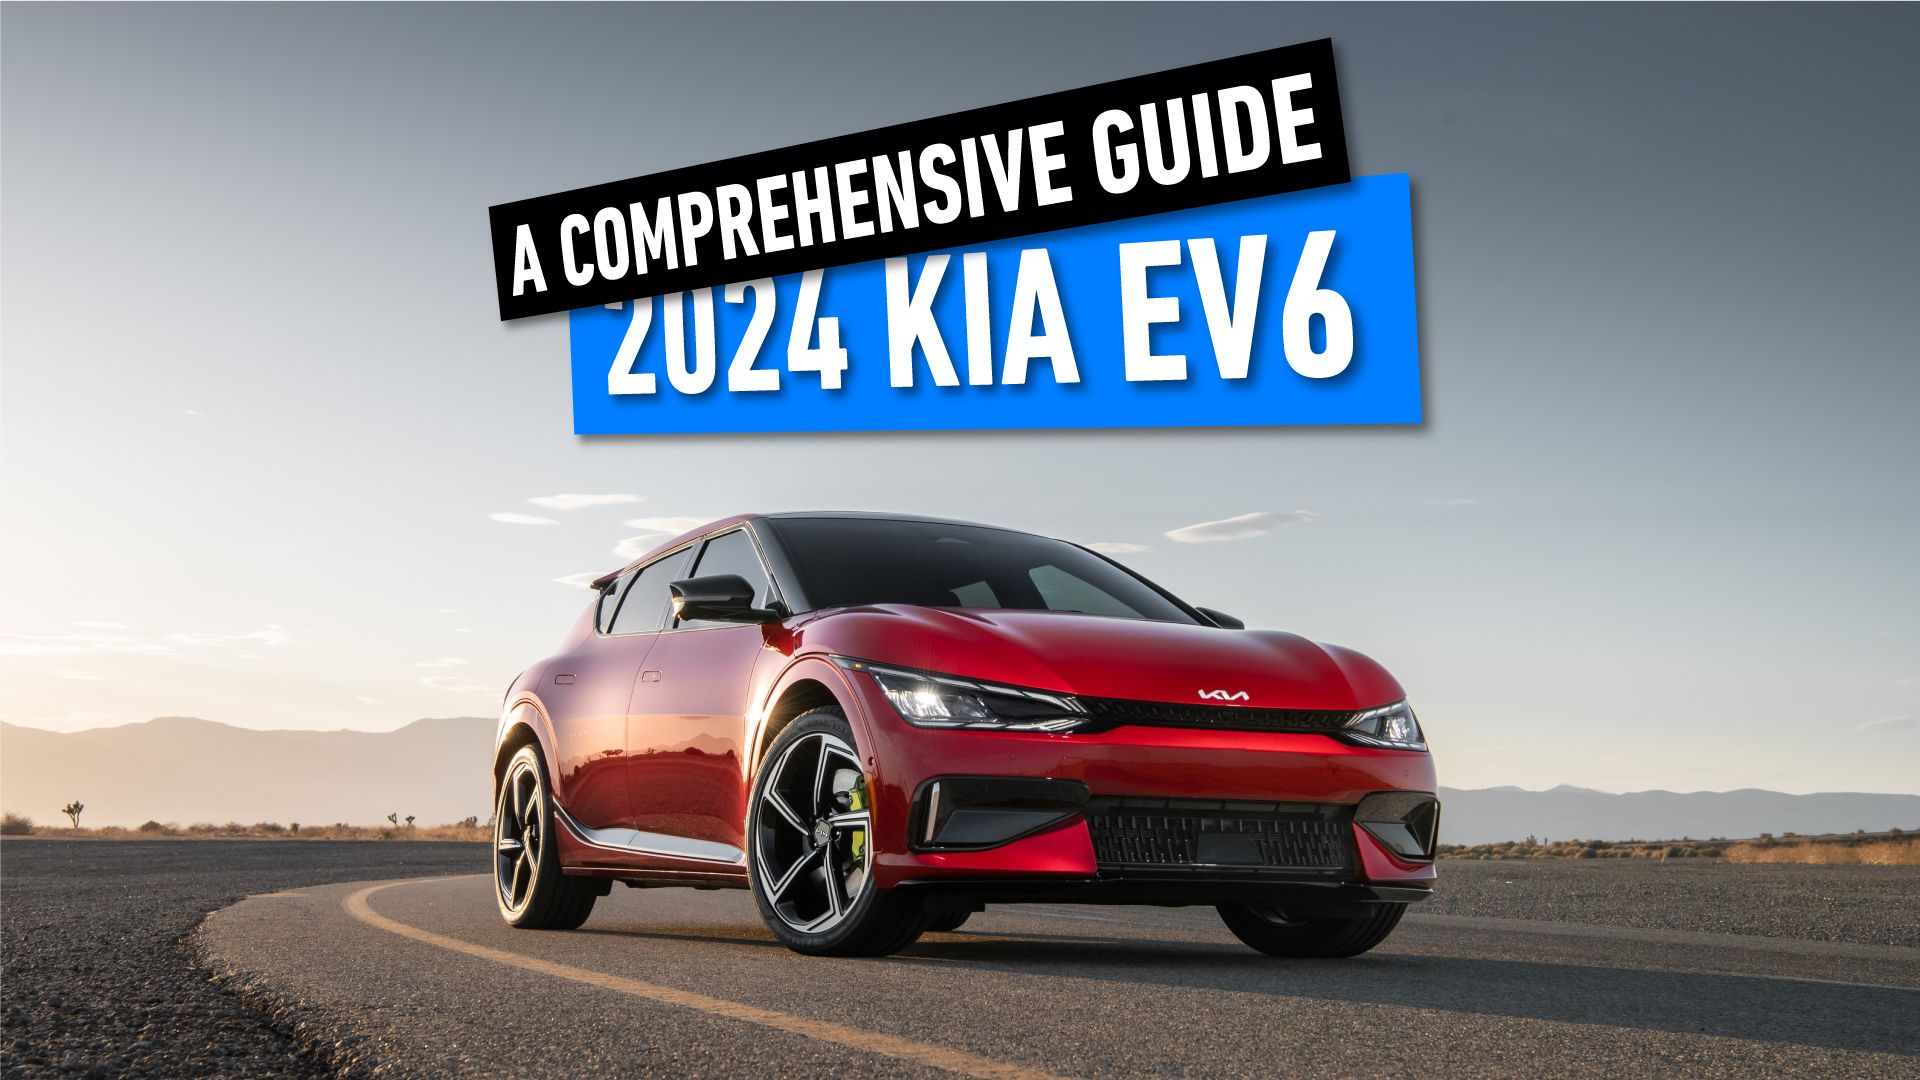 Kia EV6 A Comprehensive Guide custom featured image